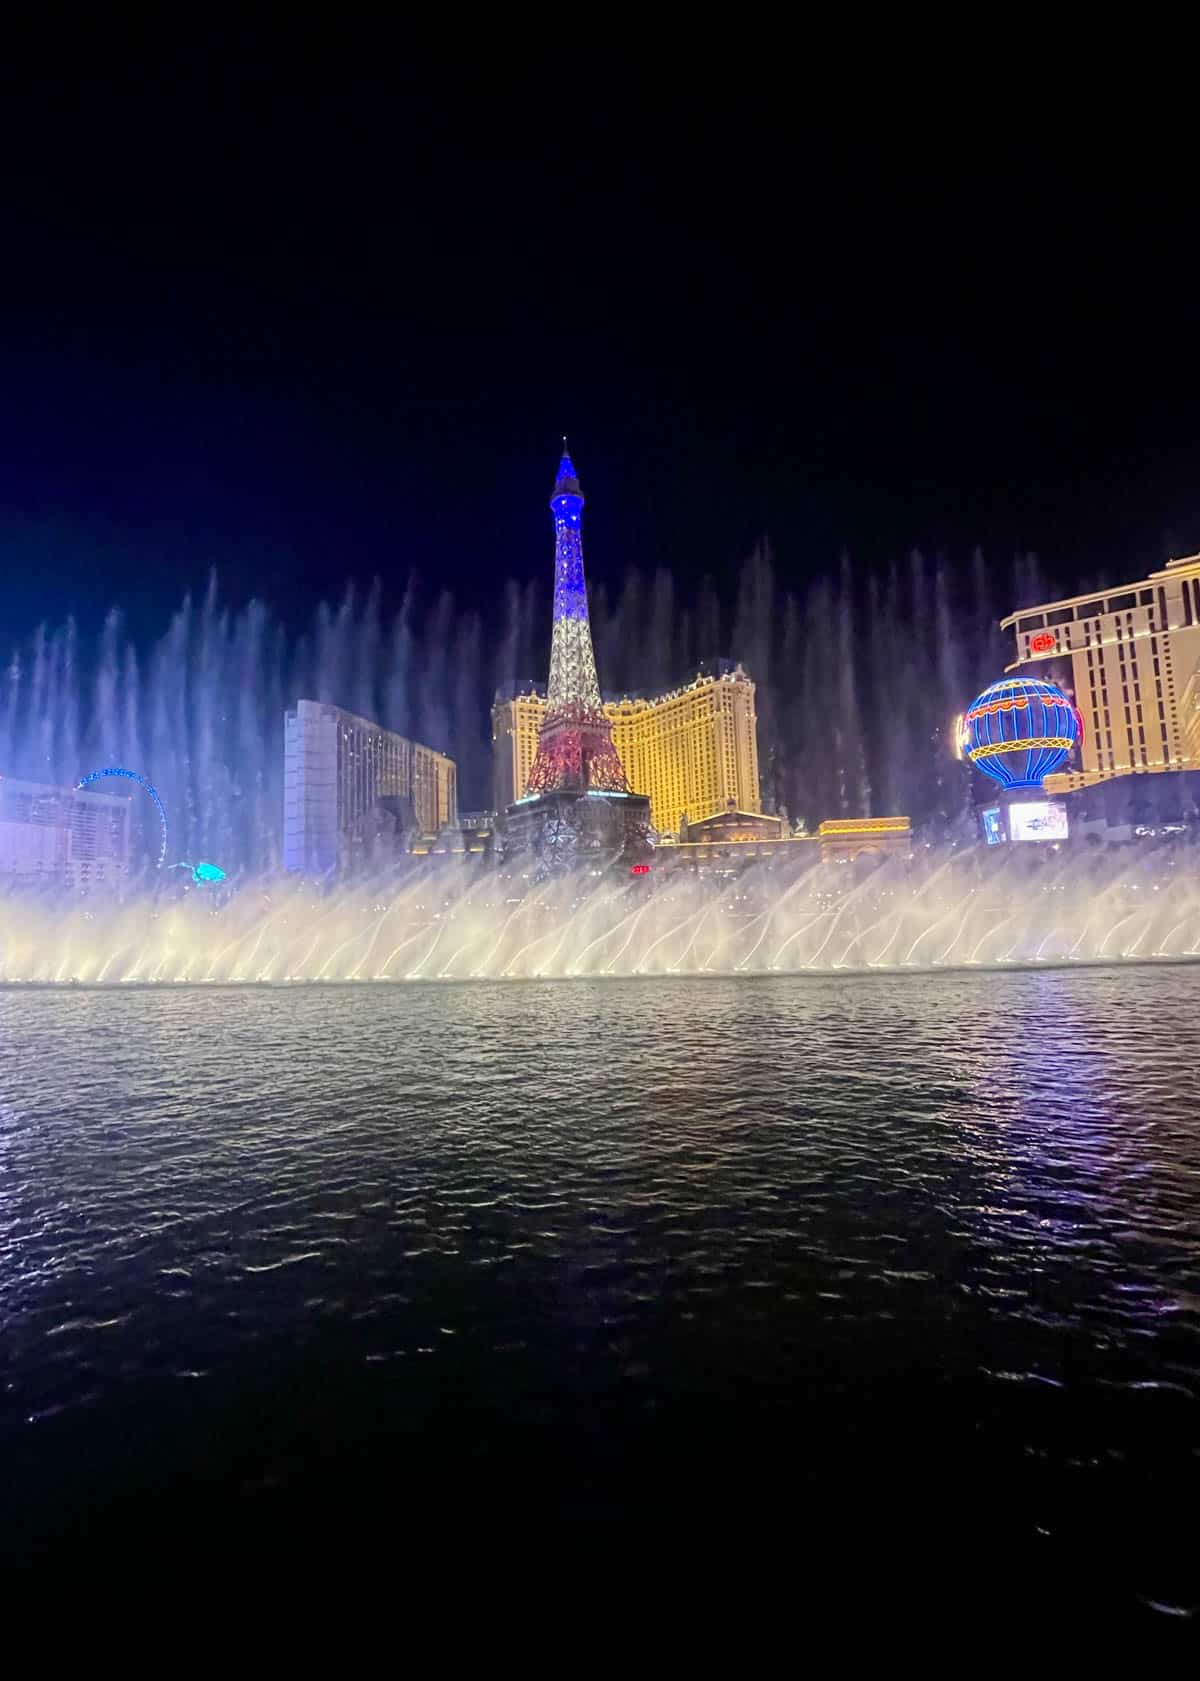 Bellagio Las Vegas fountain at night.